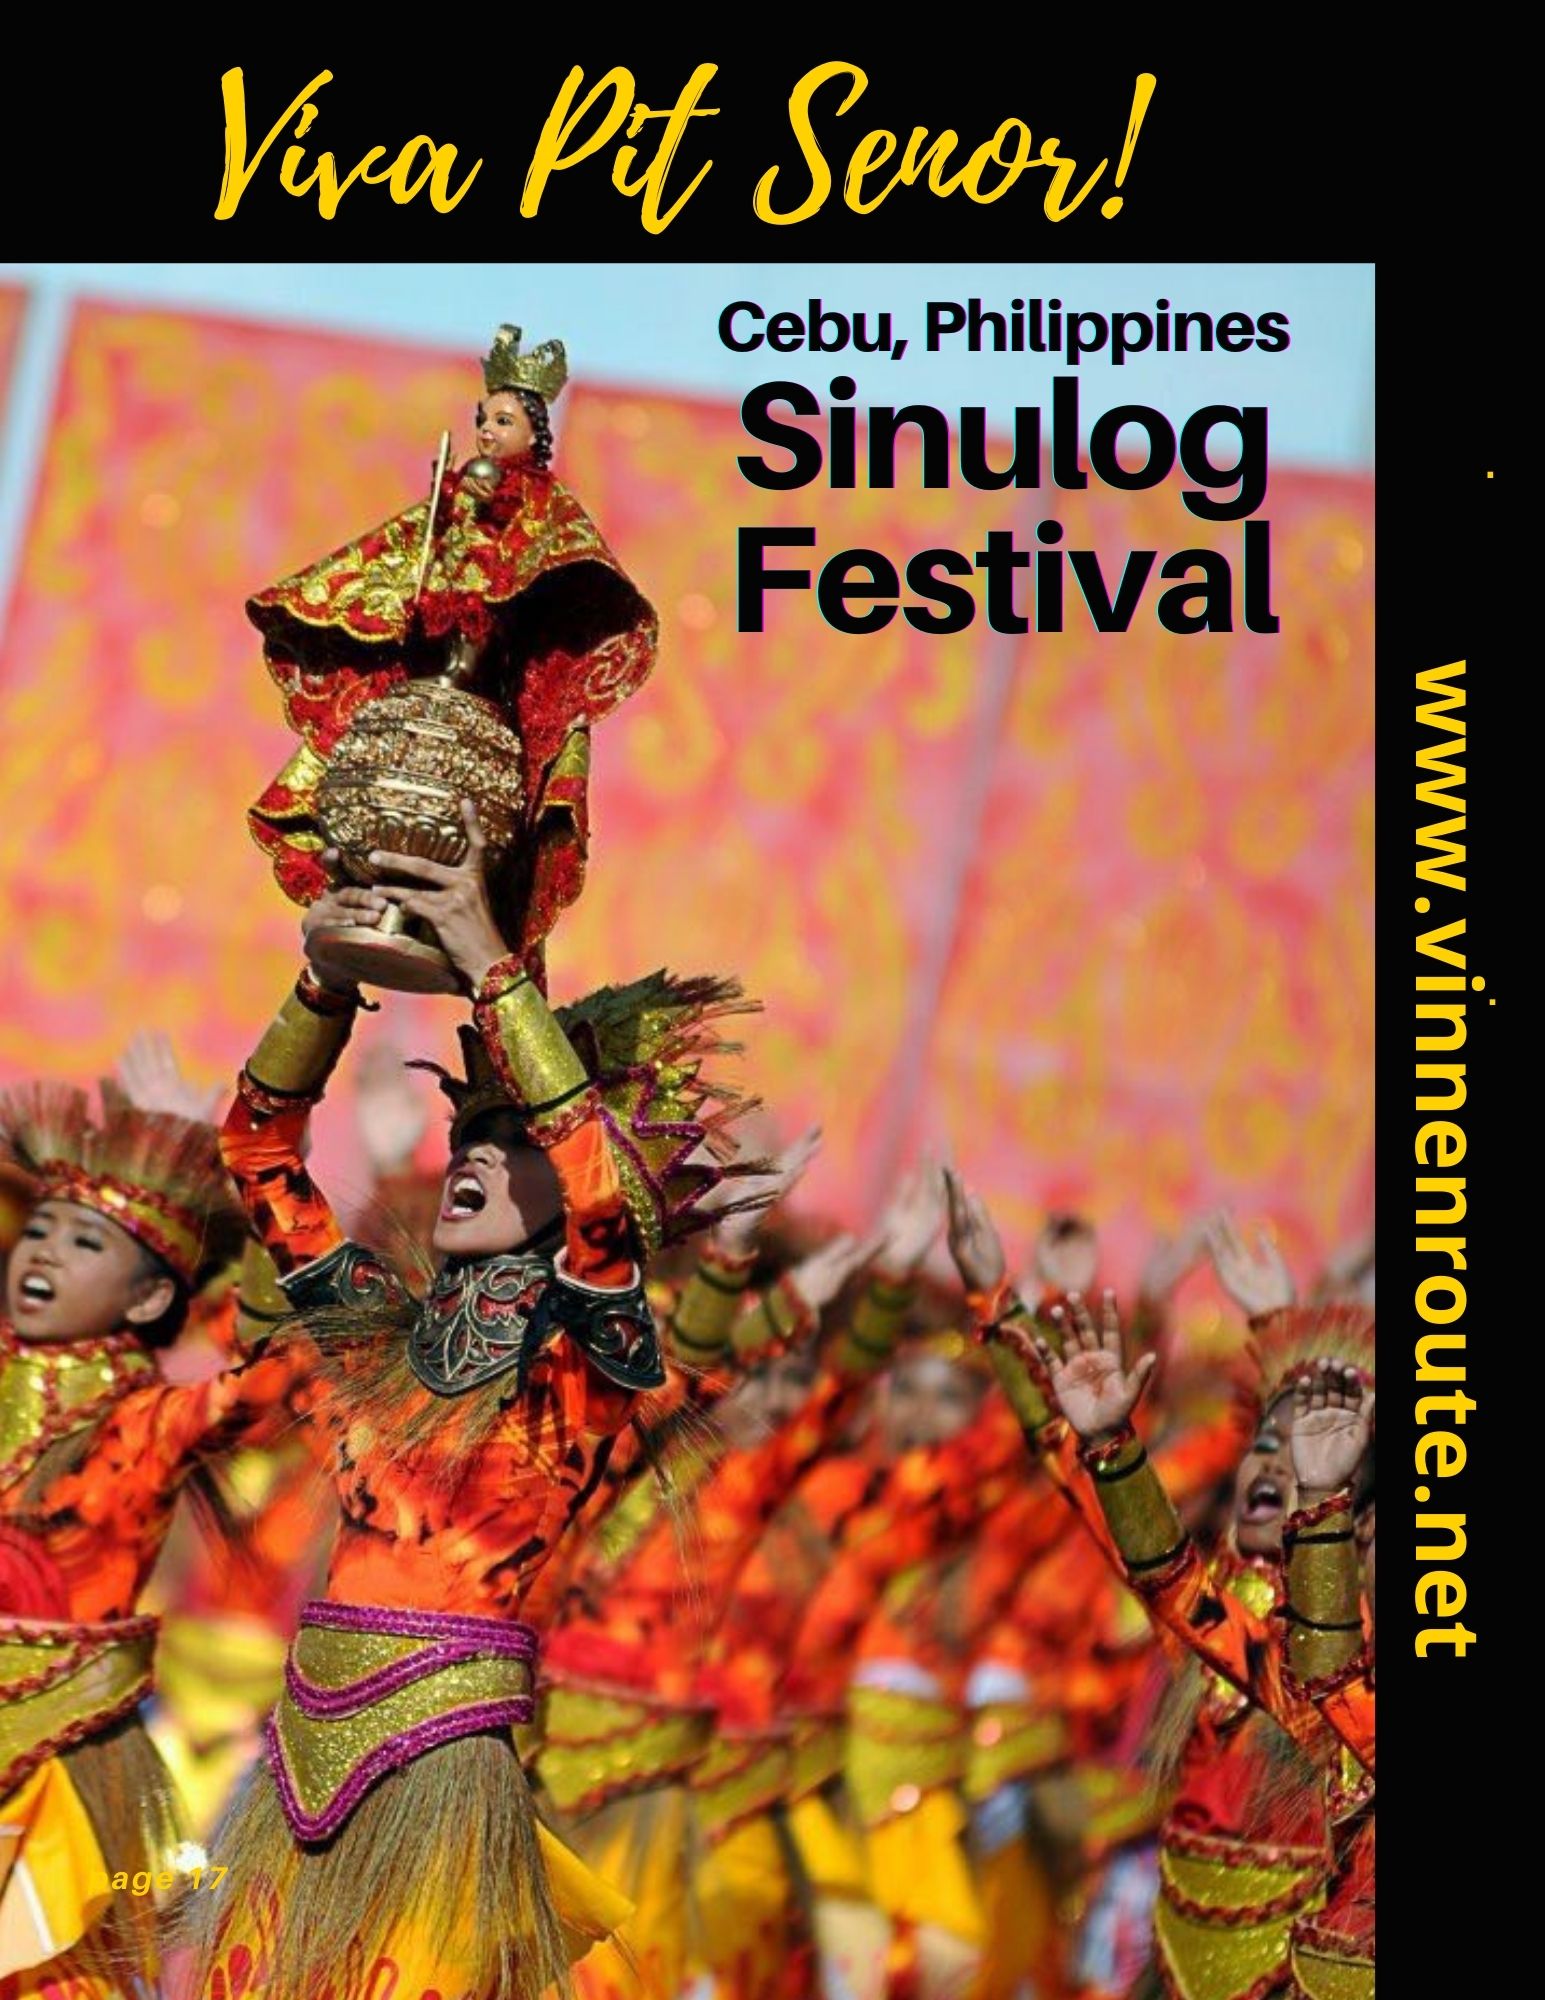 Sinulog Festival Cebu Philippines